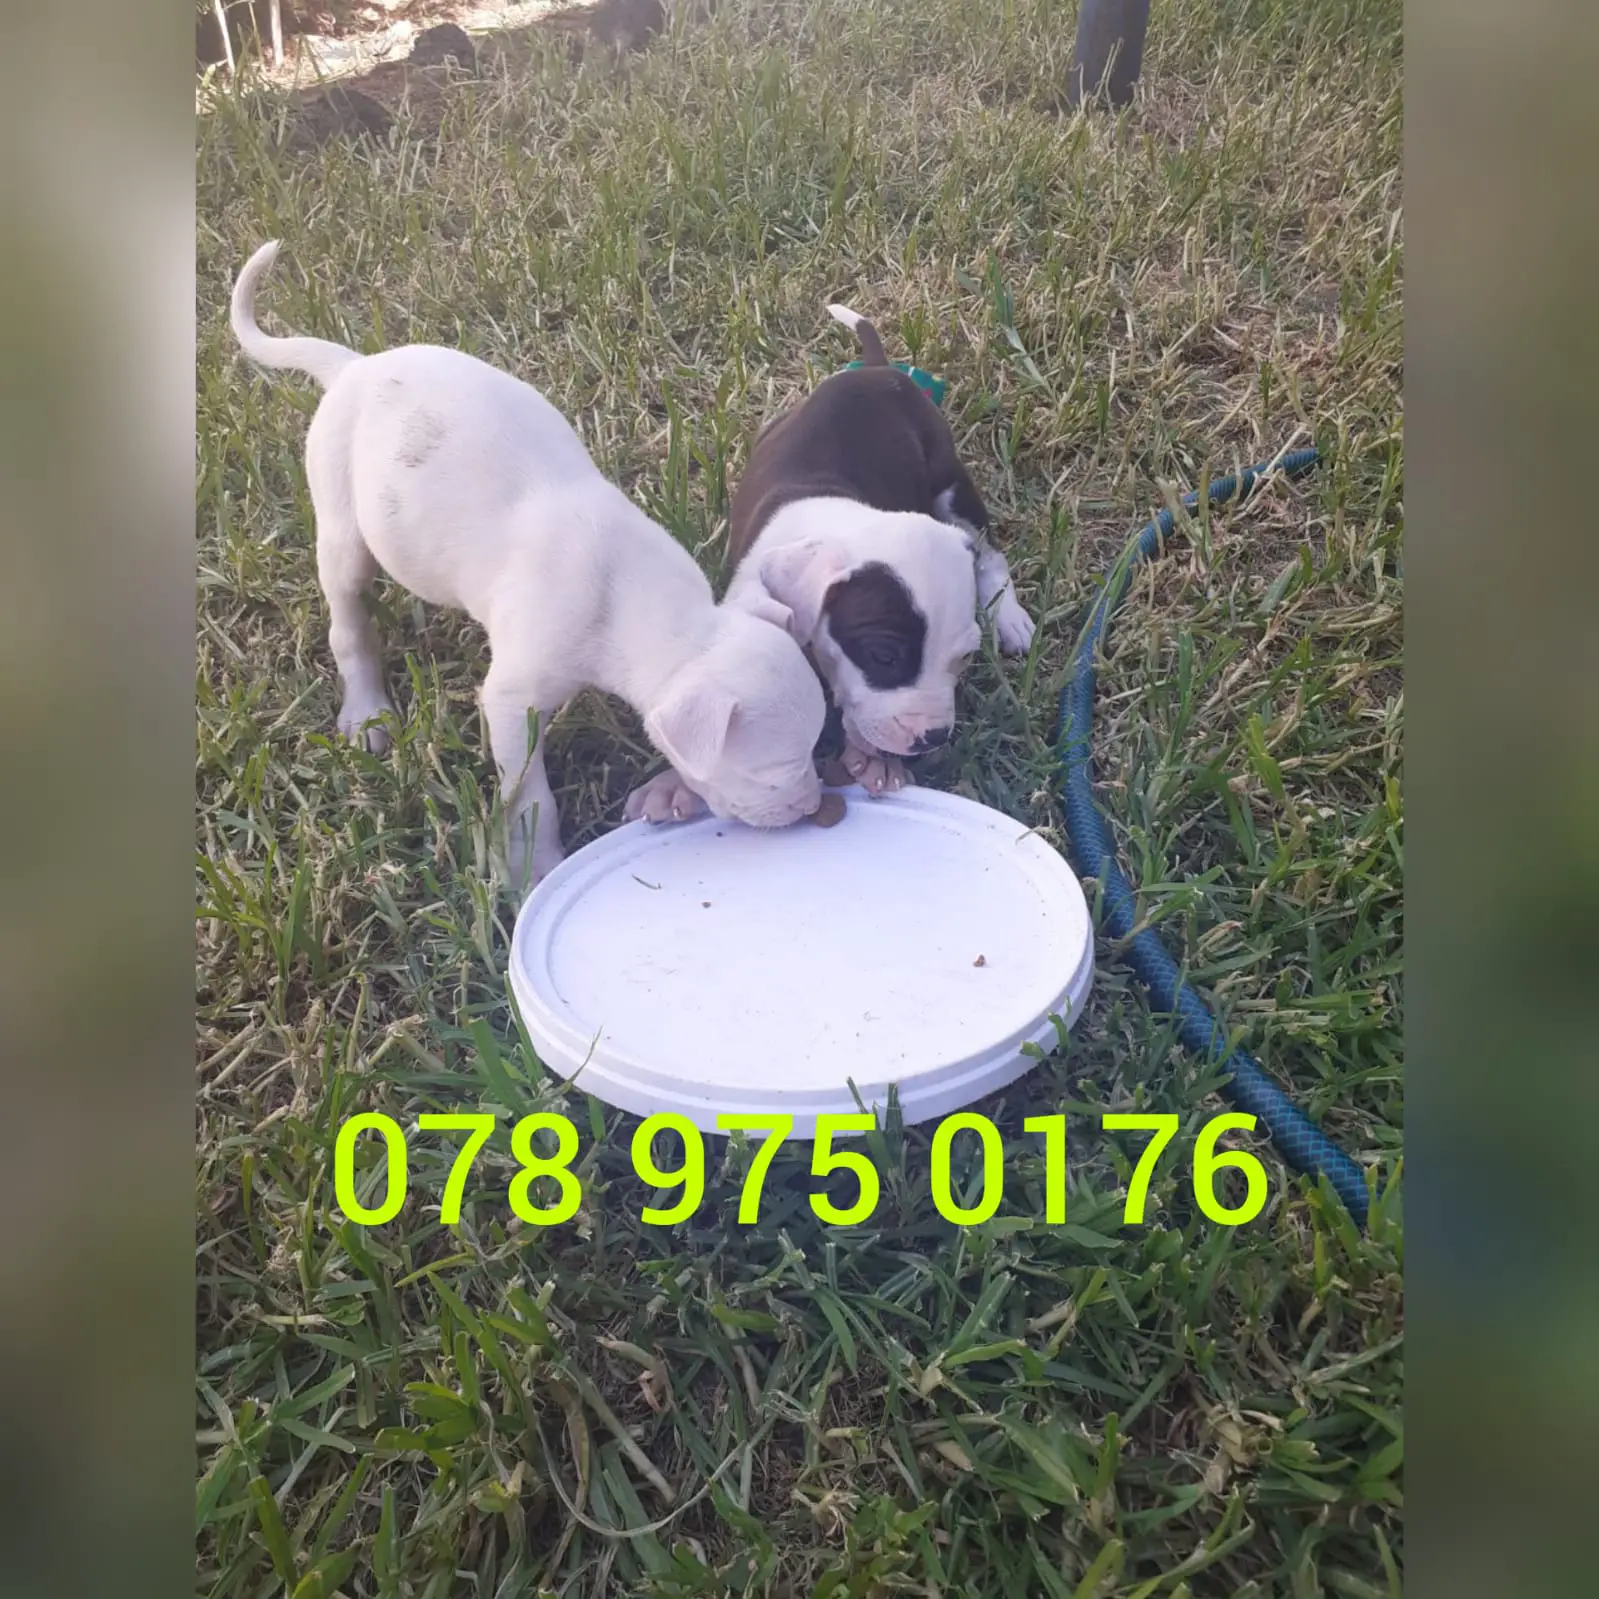 Pitbull Puppies in Johannesburg (18/10/2021)